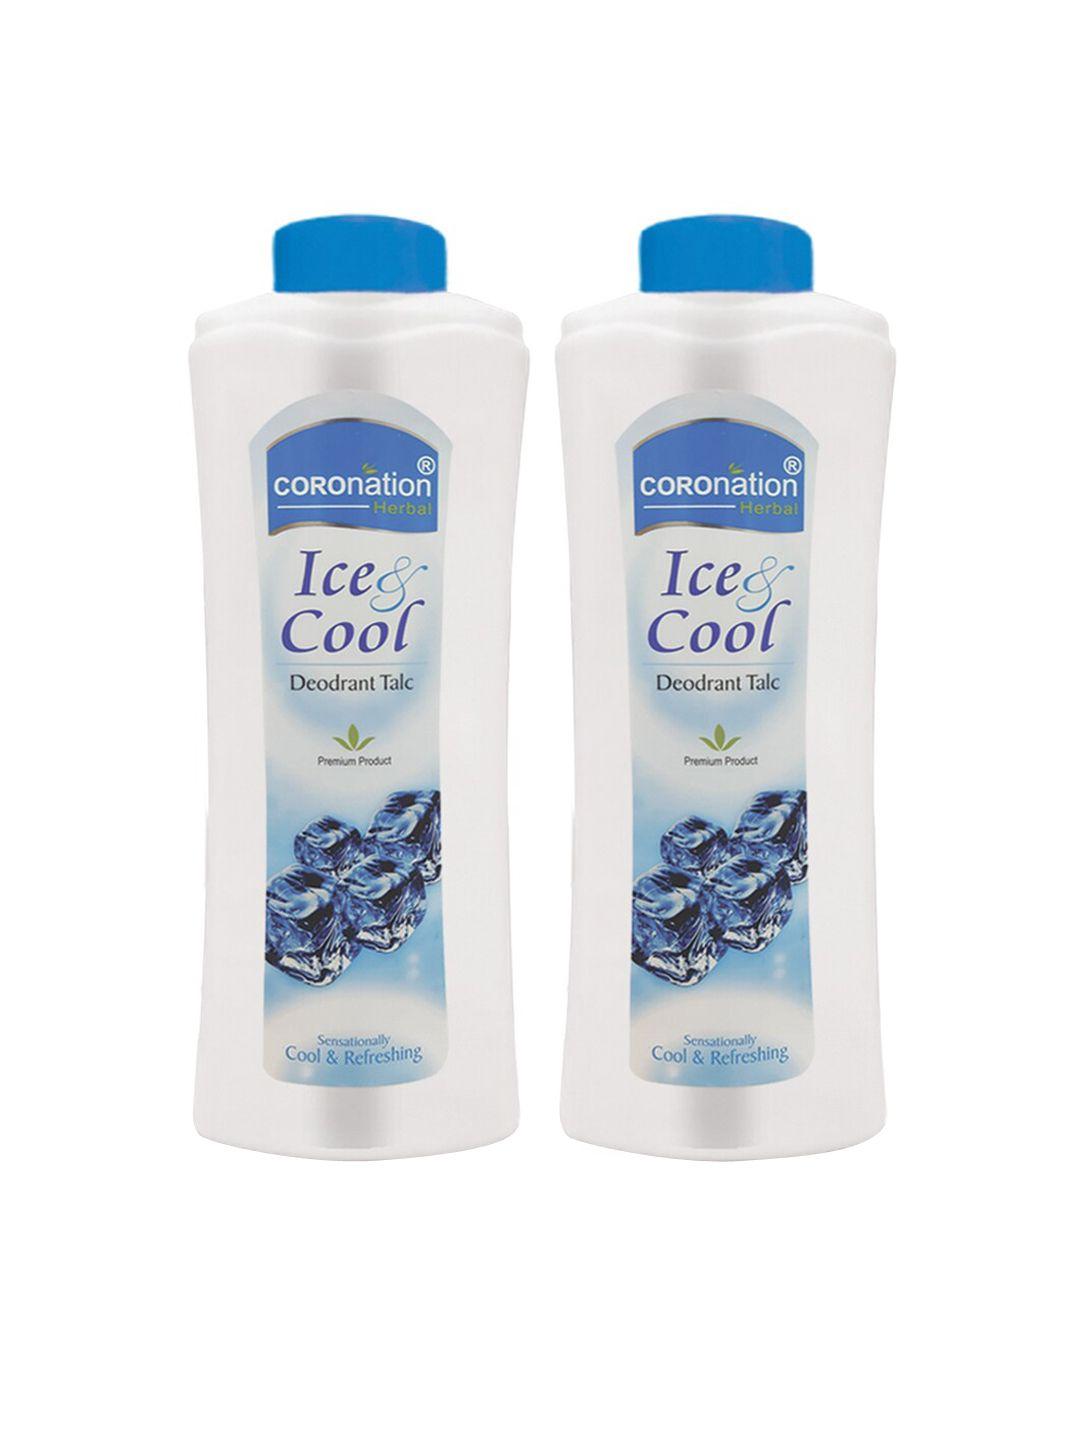 coronation herbal set of 2 ice & cool refreshing deodorant talc powders - 300g each